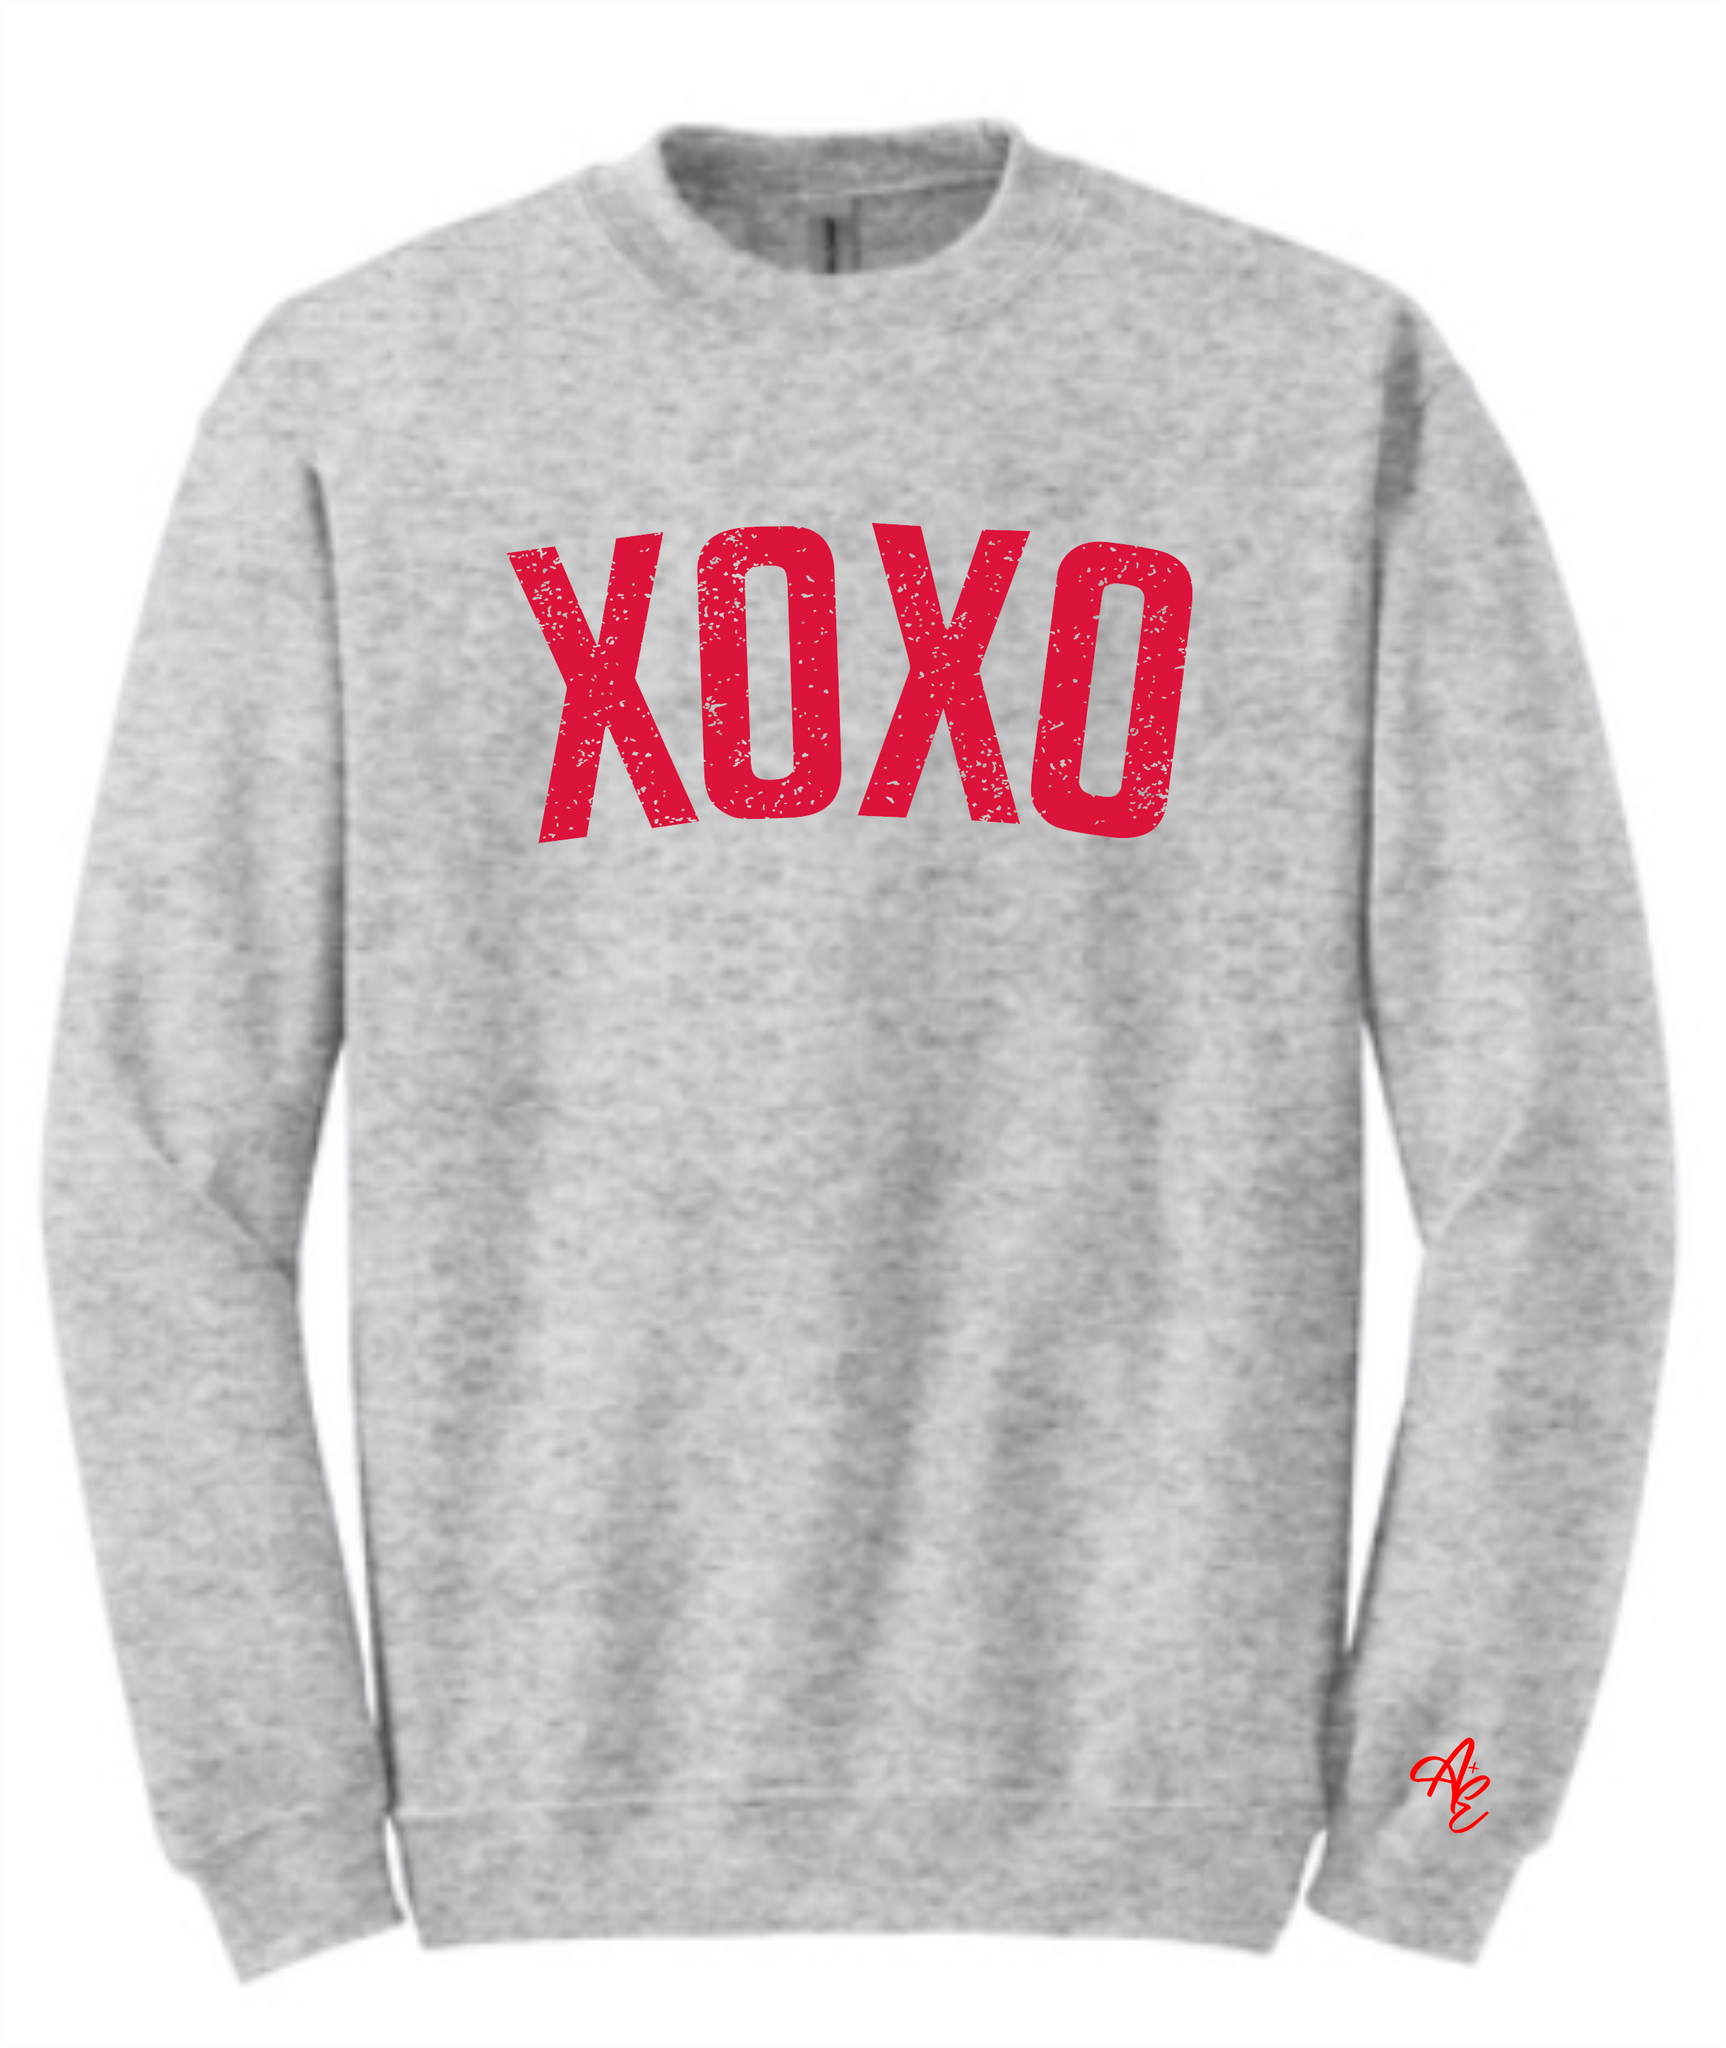 XOXO Crewneck Sweatshirt - A+E - Casual Envy Apparel 